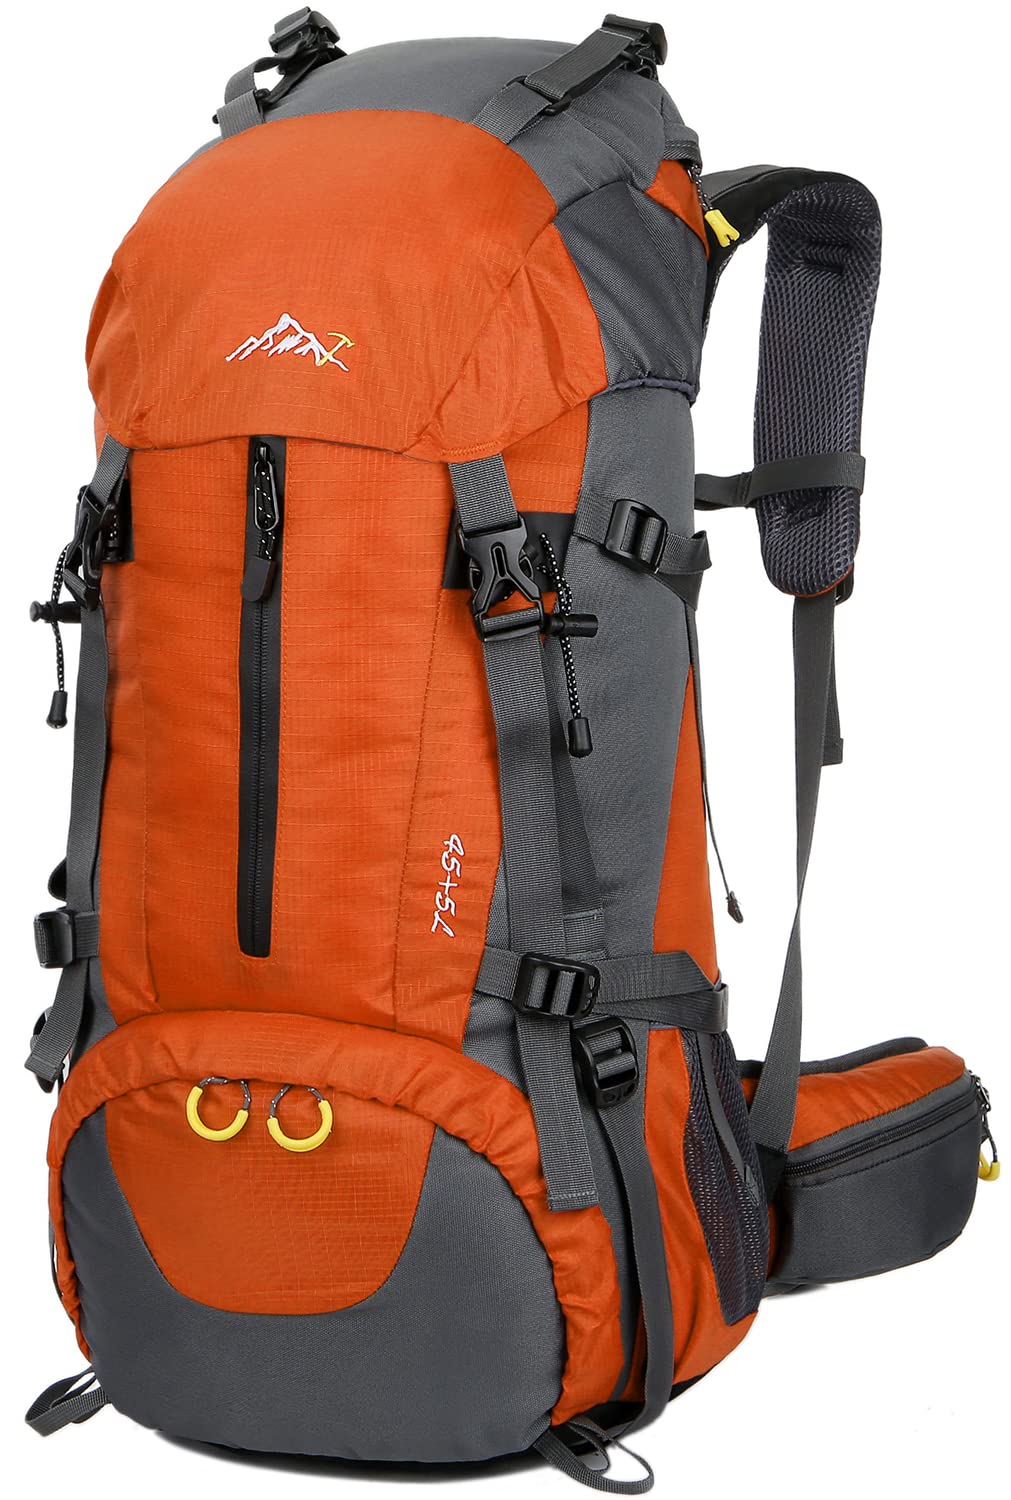 Esup 50L Hiking Backpack Men Camping Backpack with rain cover 45l+5l  Lightweight Backpacking Backpack Travel Backpack Orange